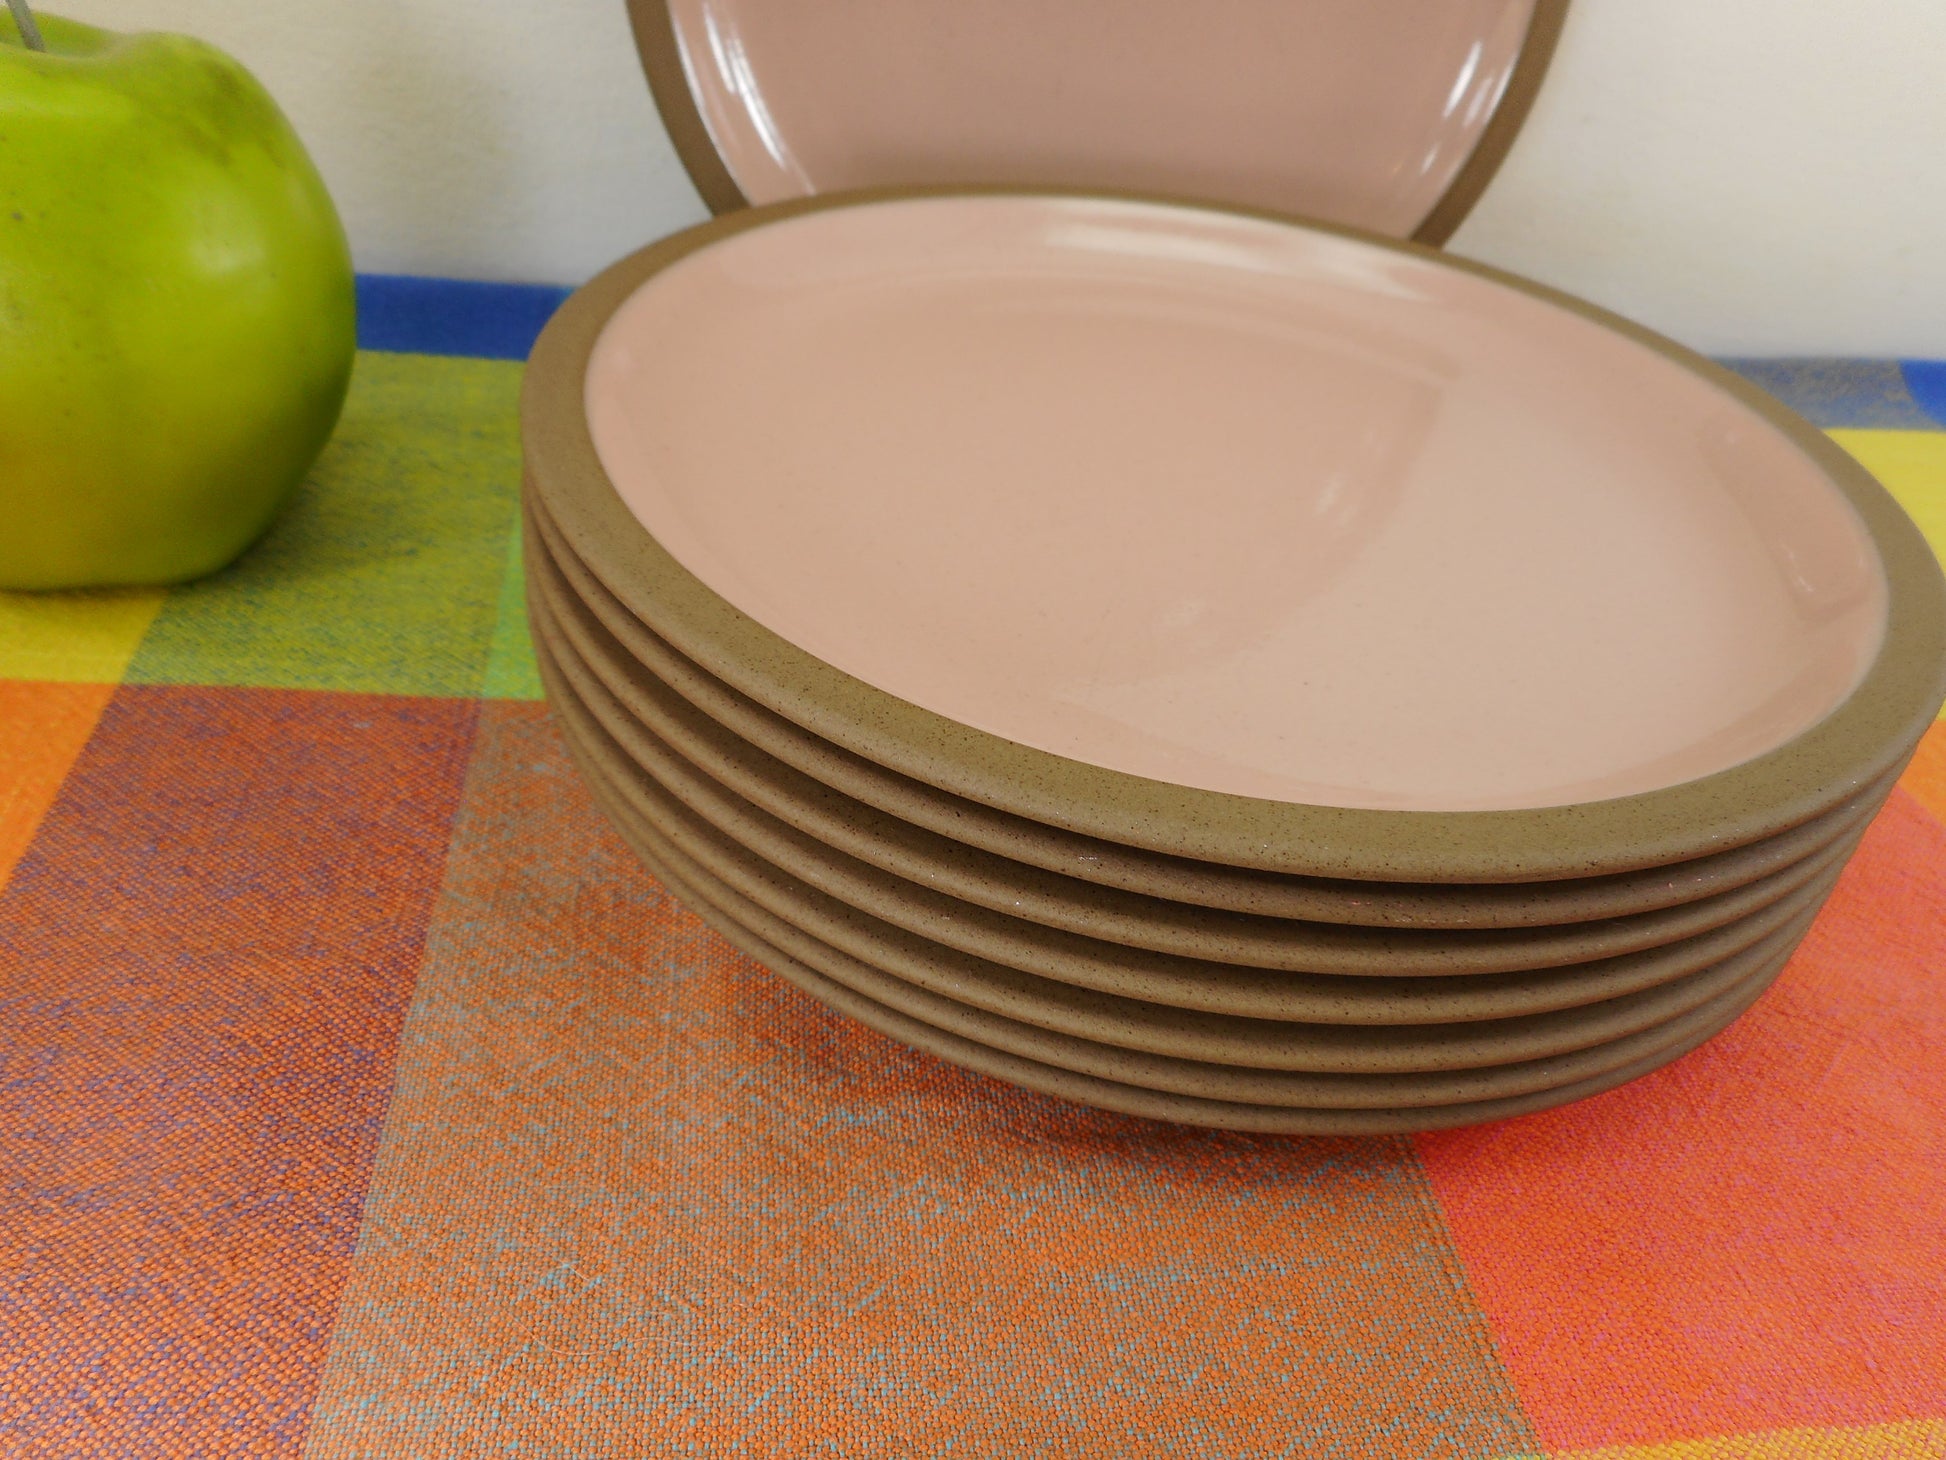 Midwinter Ltd. Japan CORAL SAND - 8 Set Salad Plates 7-5/8" Pink Tan NOS